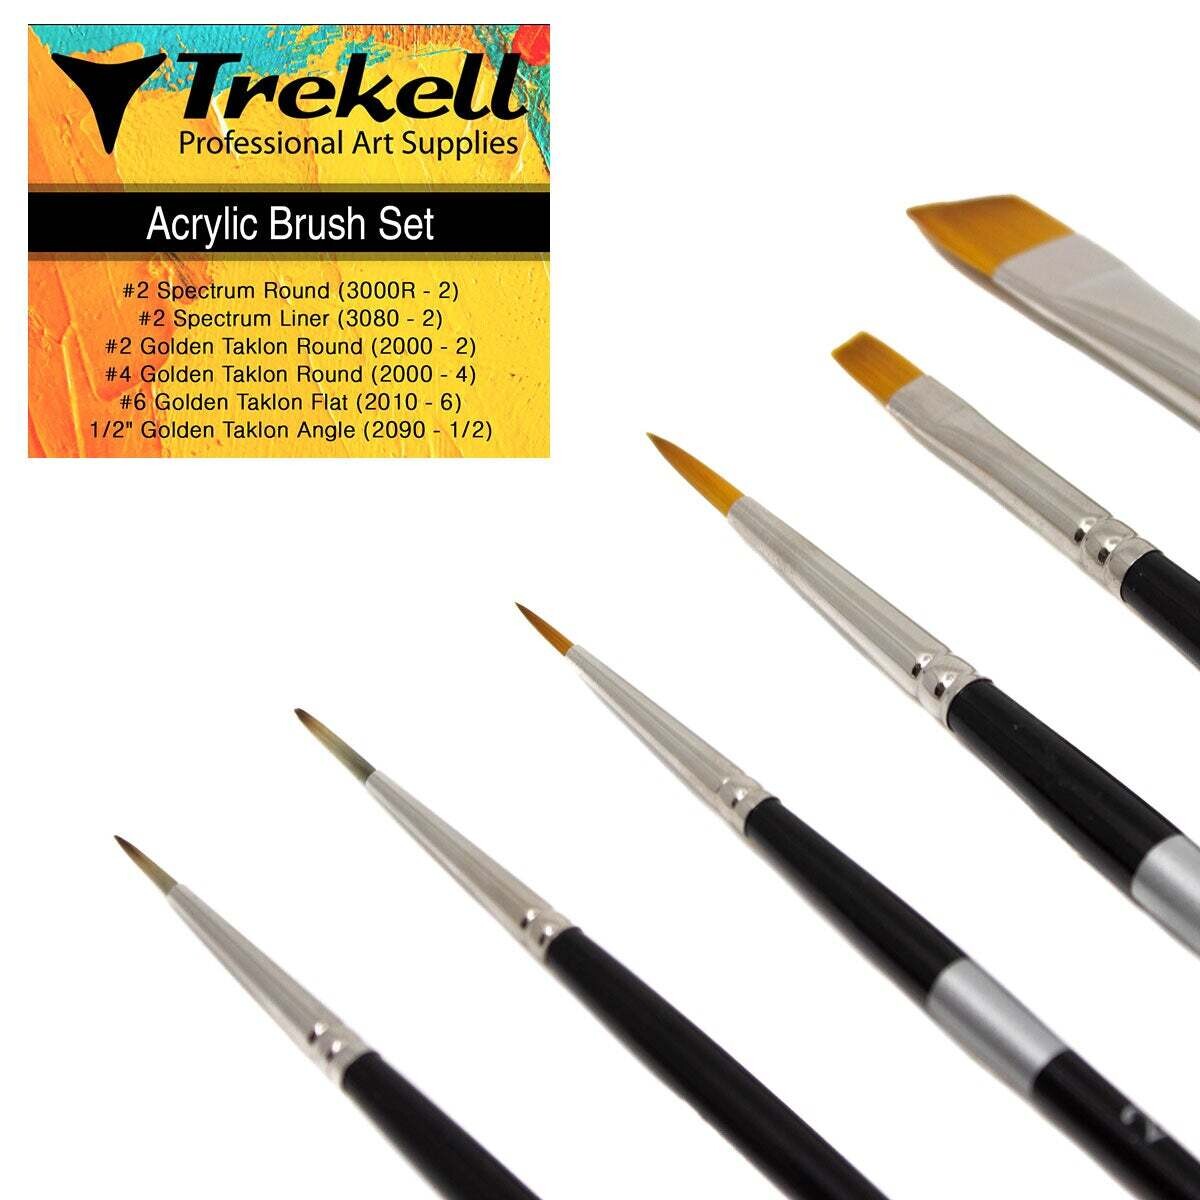 Trekell Acrylic Brush Set